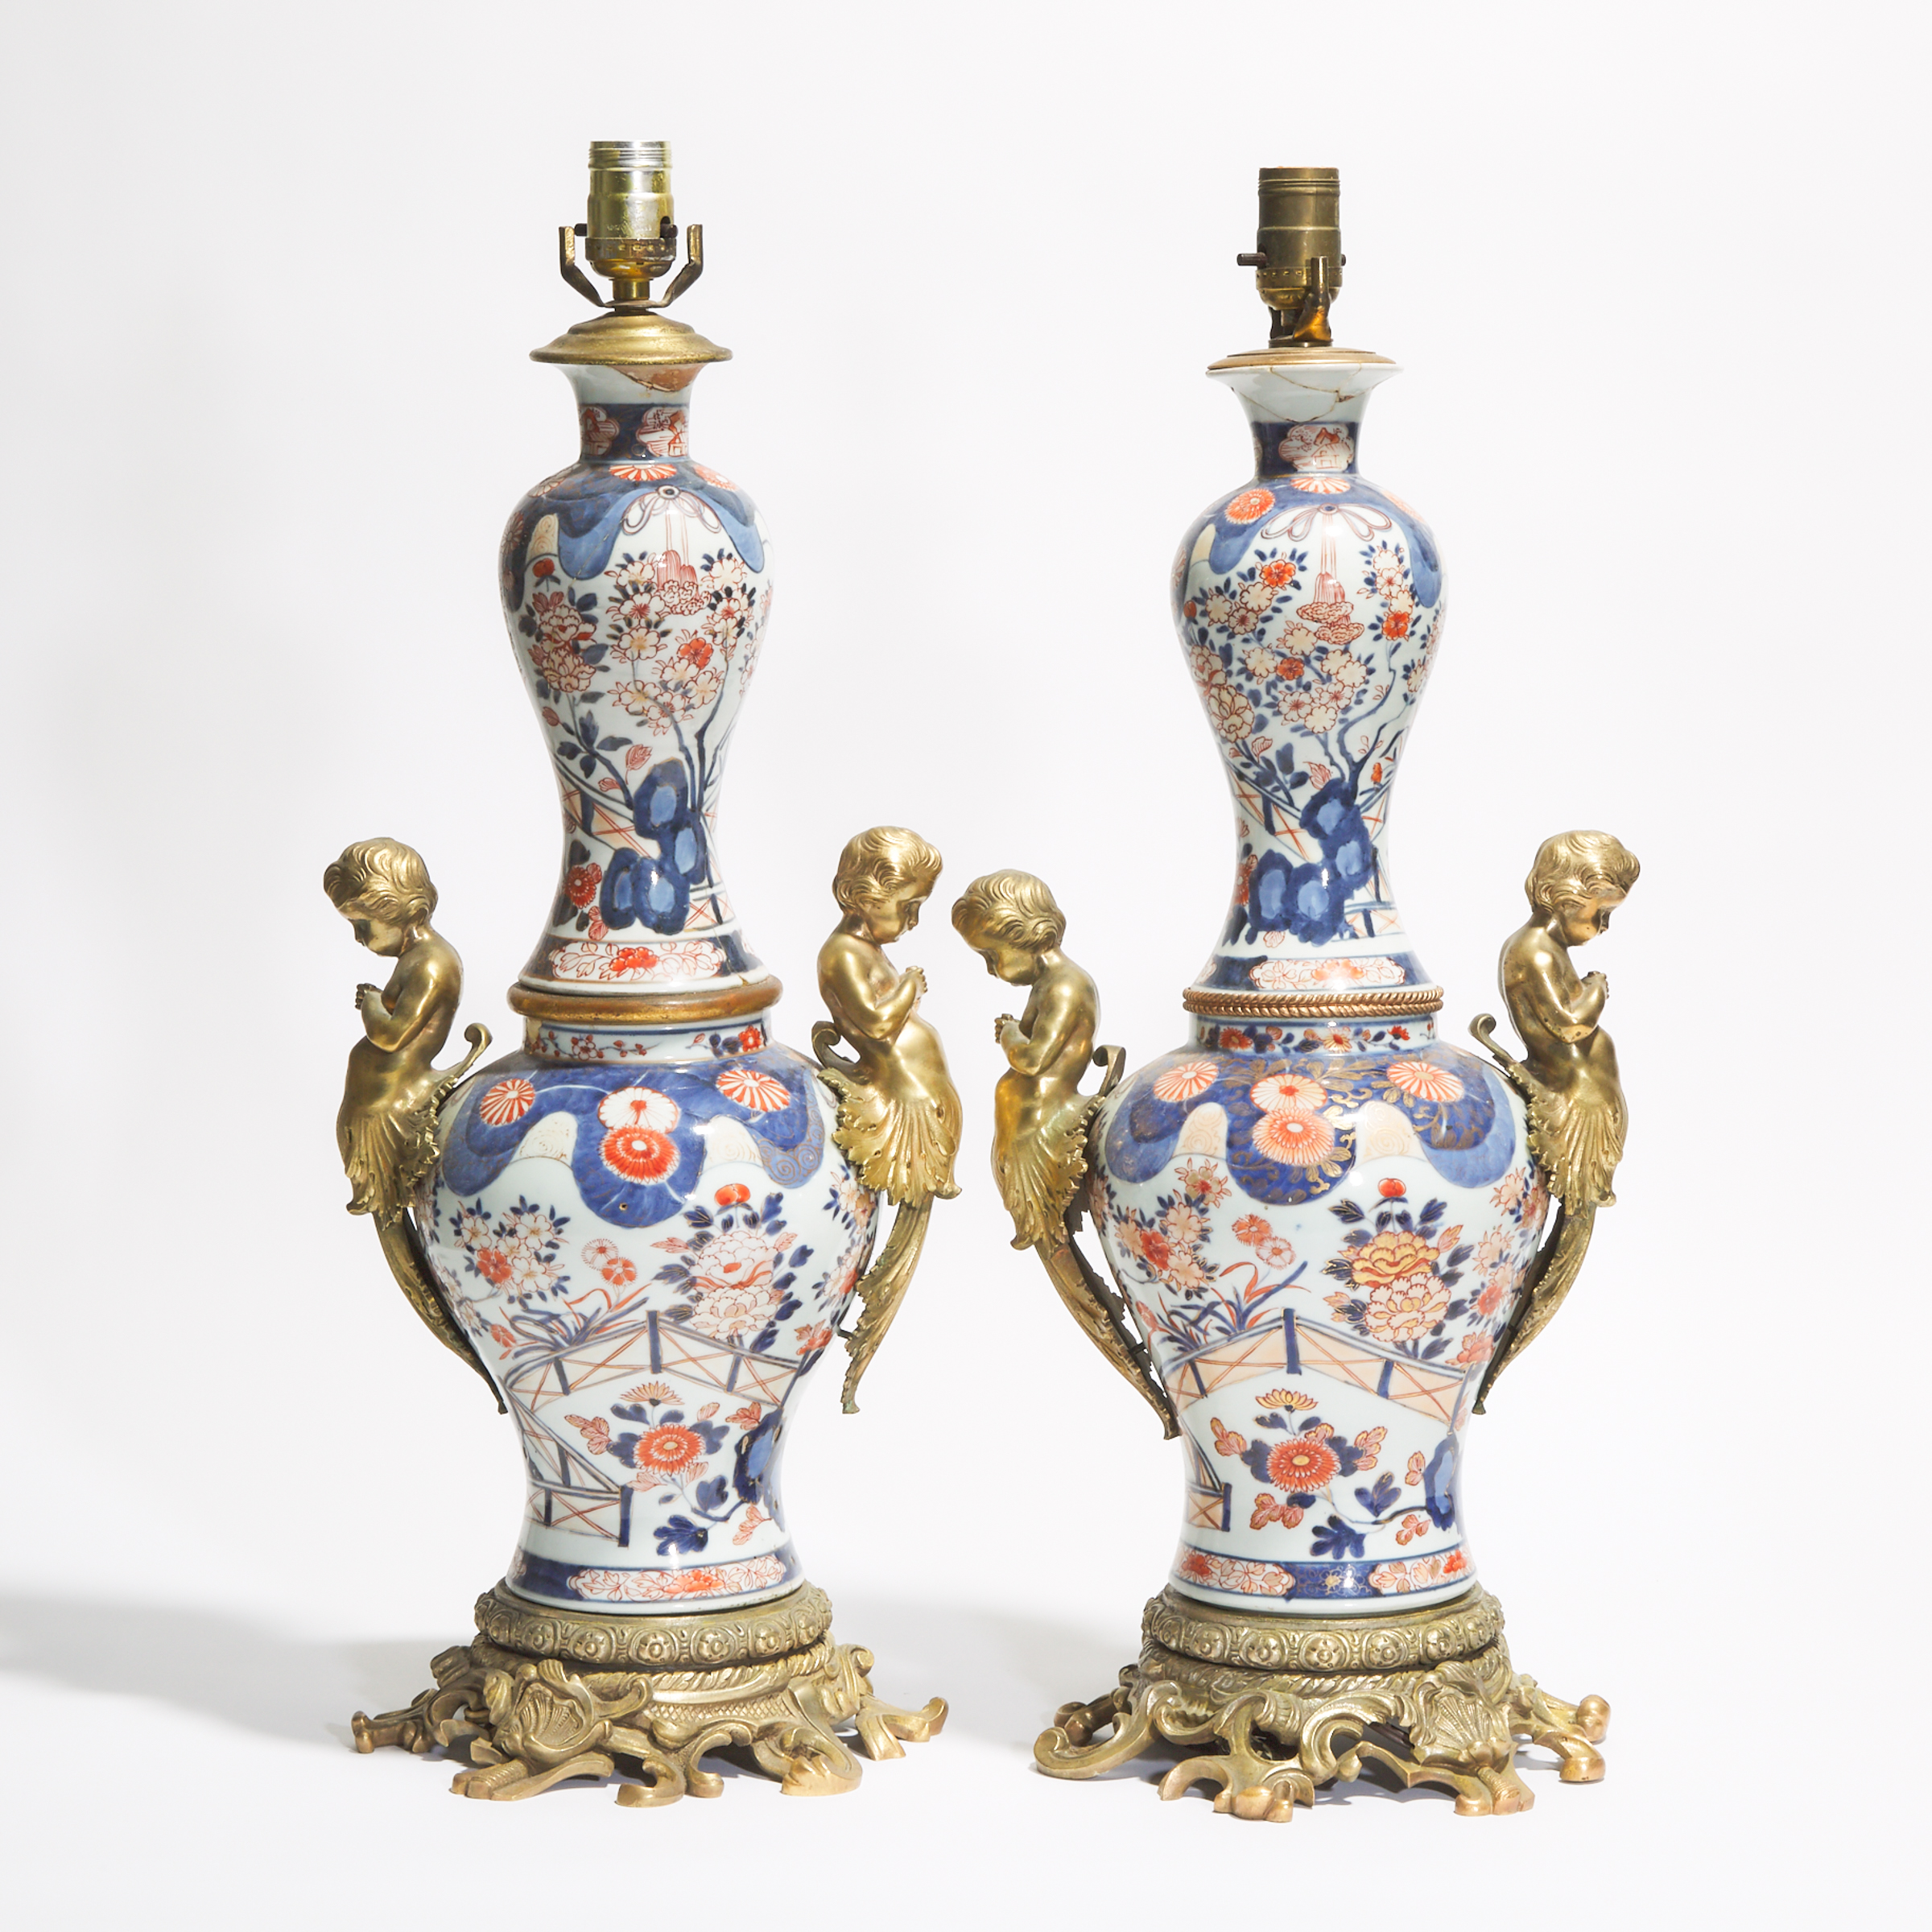 A Pair of Ormolu Mounted Imari Porcelain Vase Lamps, 19th Century